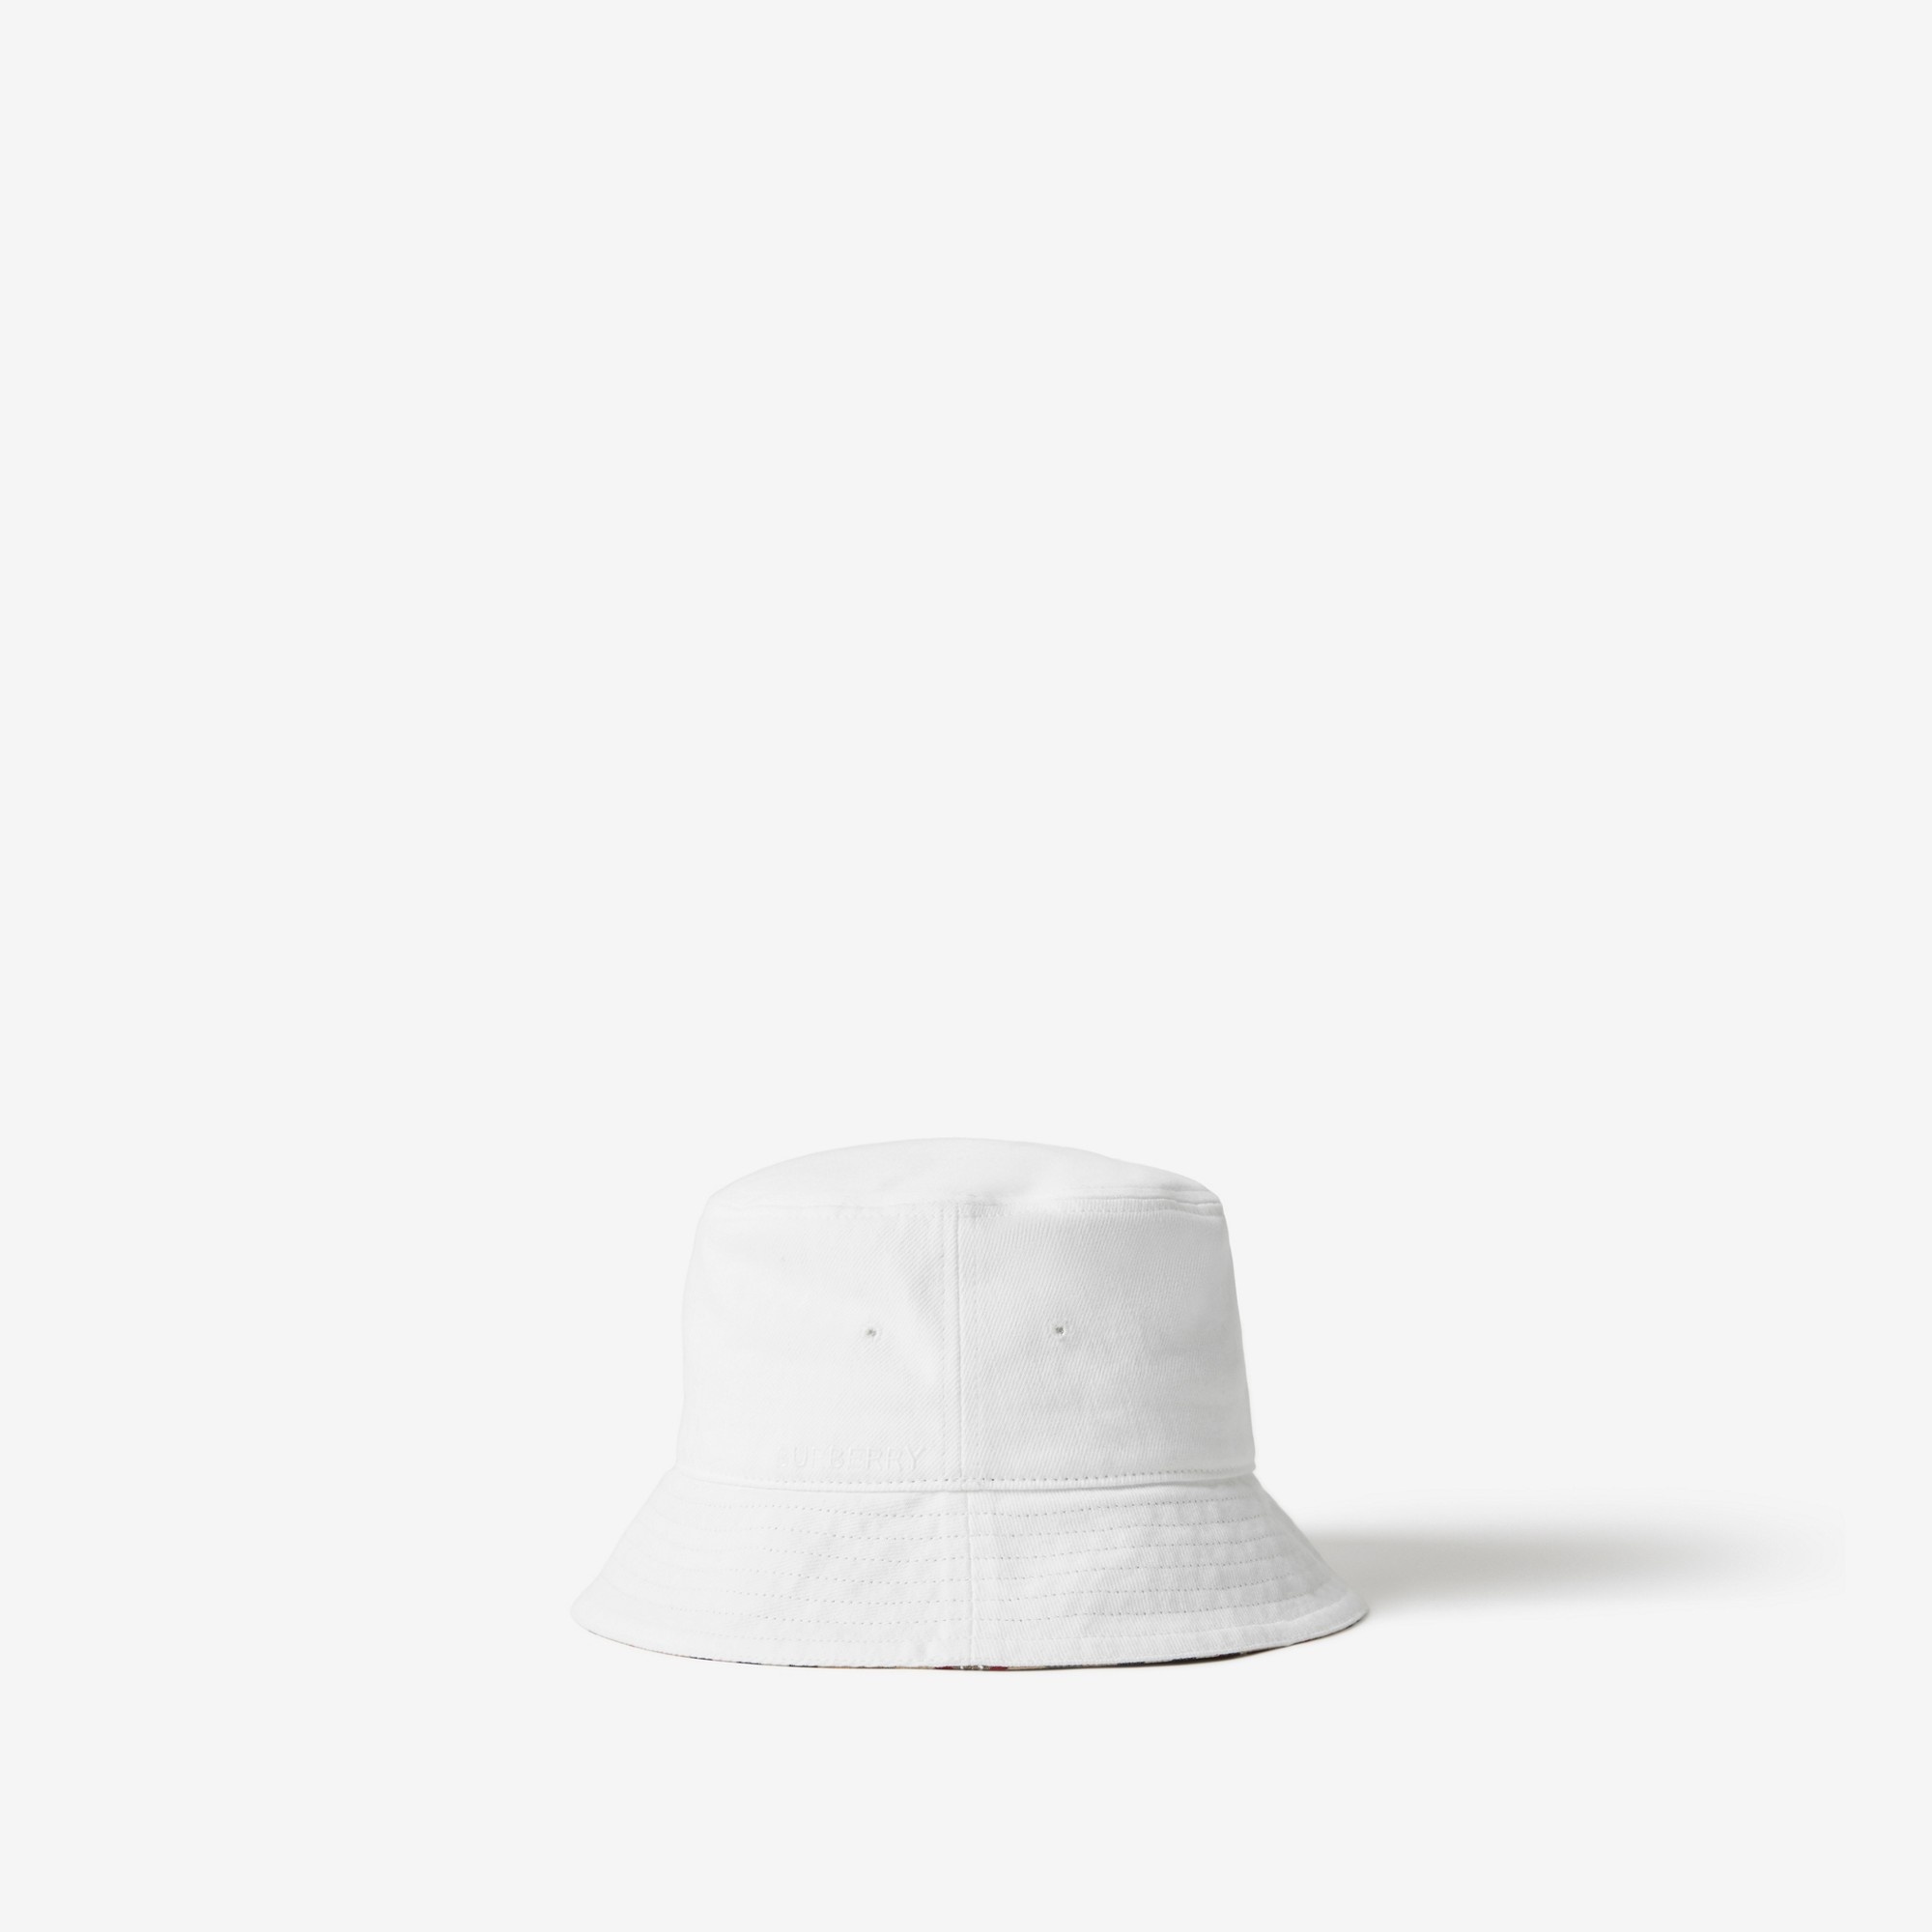 Denim Bucket Hat - 2